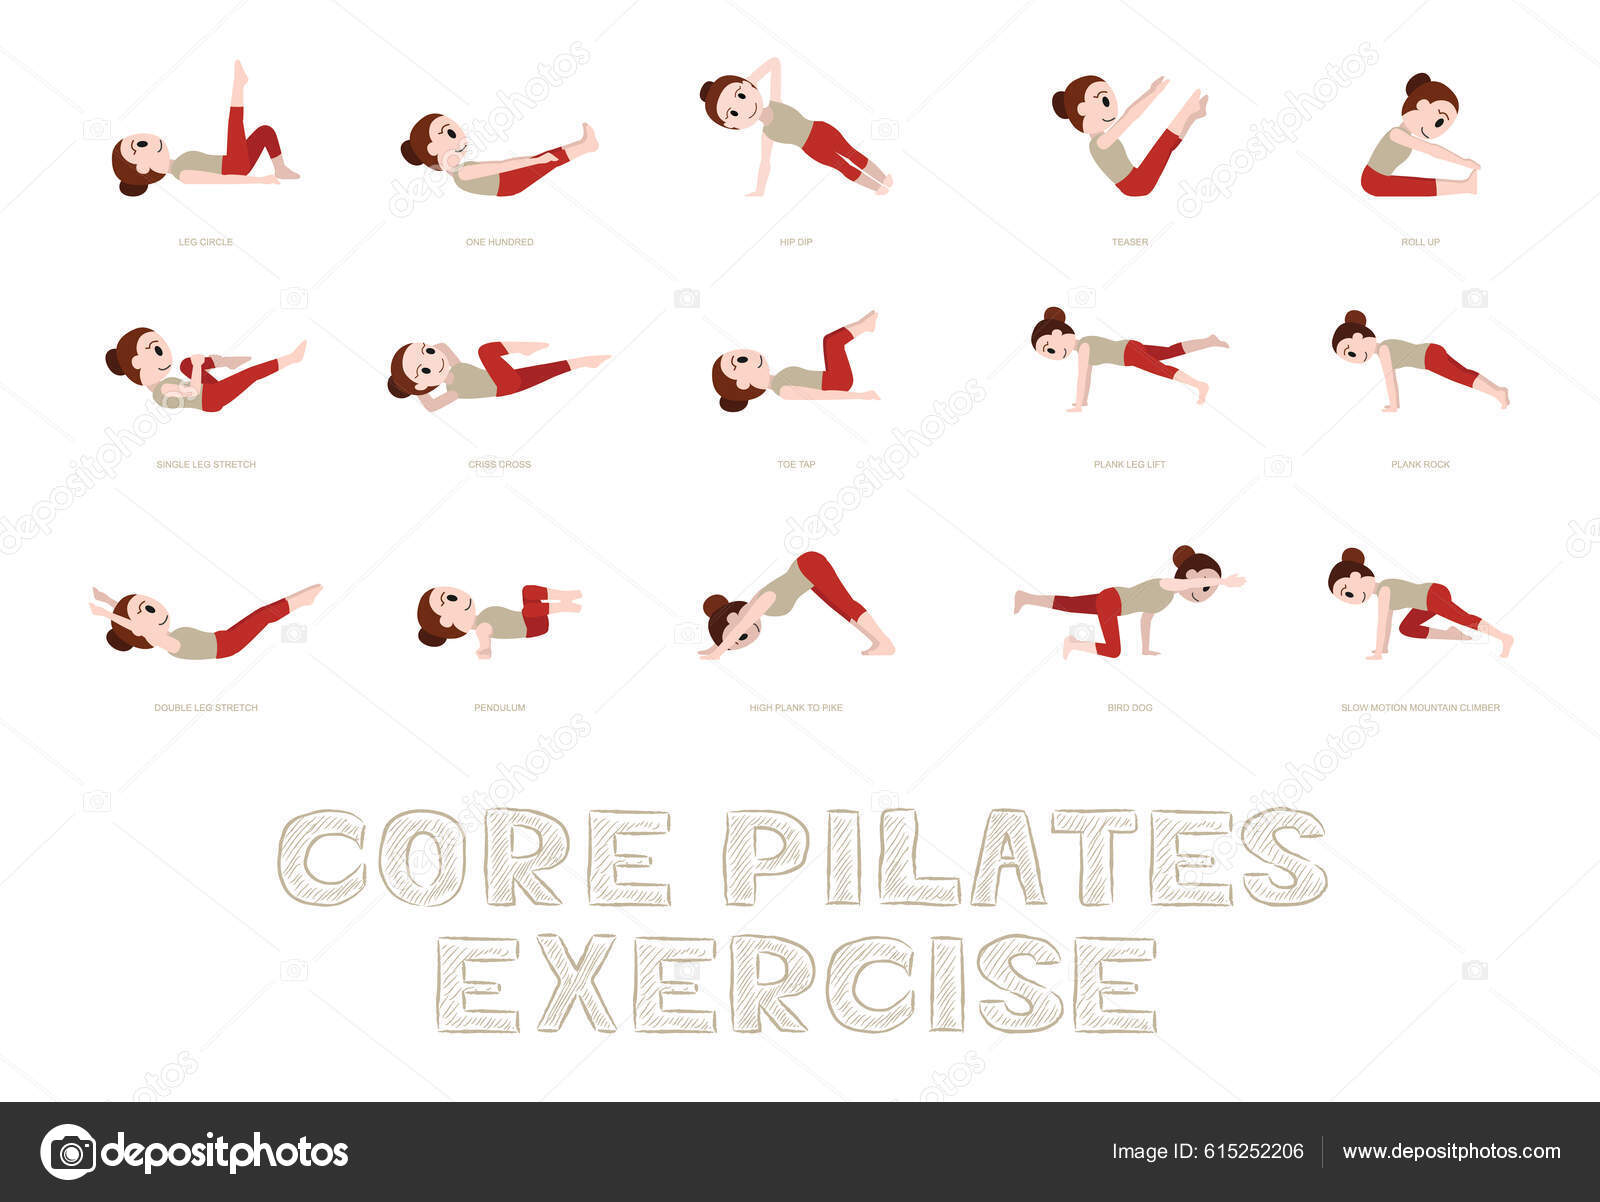 https://st.depositphotos.com/30783530/61525/v/1600/depositphotos_615252206-stock-illustration-pilates-core-exercise-pose-cartoon.jpg